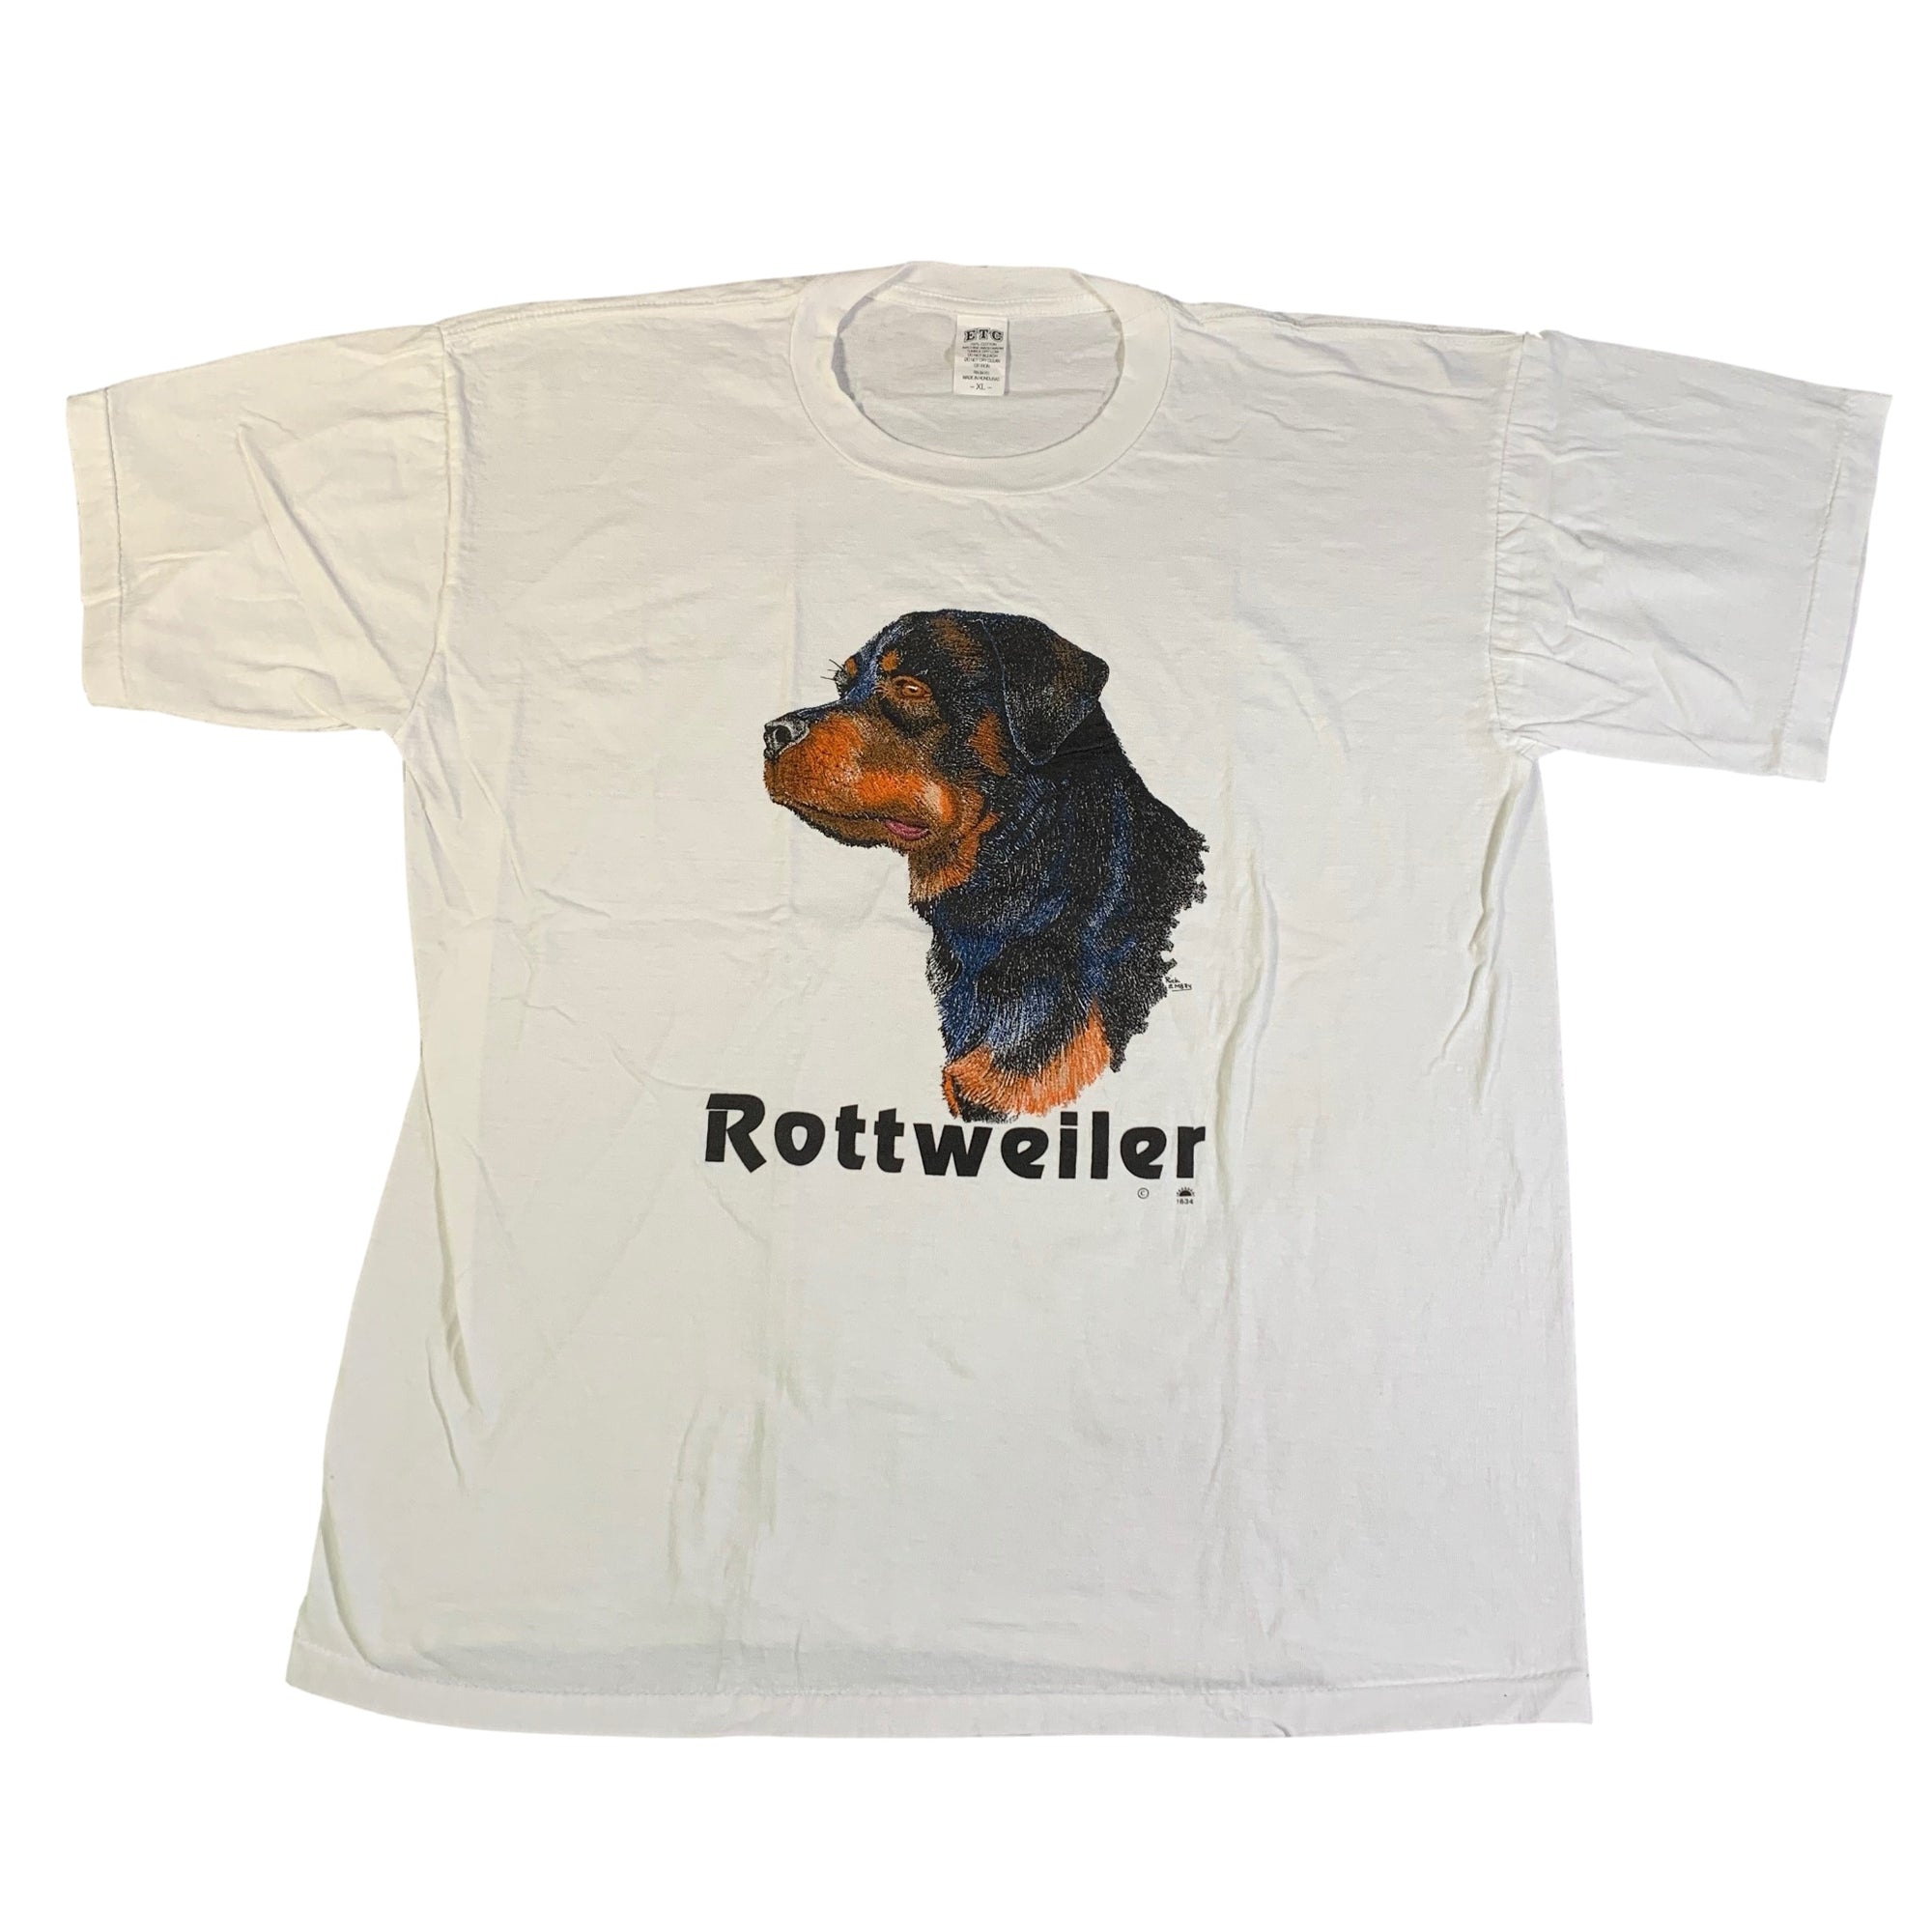 Vintage Rick Embry "Rottweiler" T-Shirt - jointcustodydc